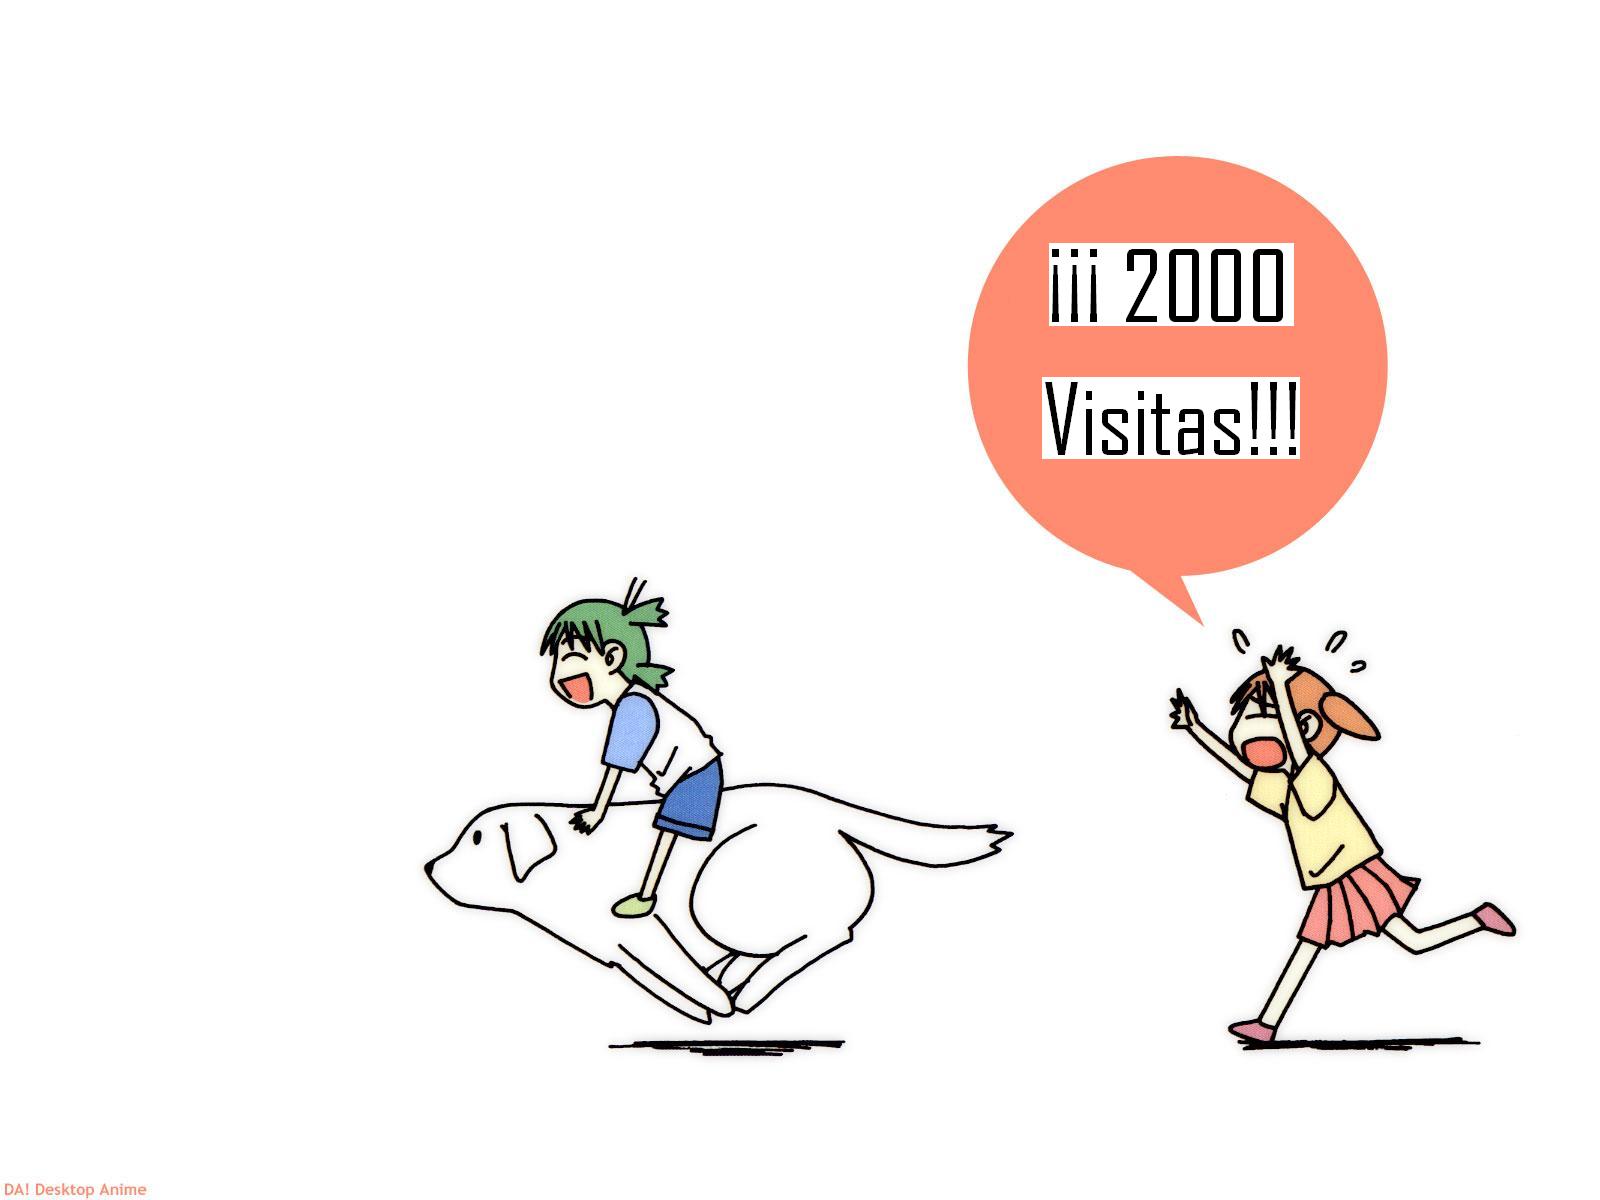 [2000+visitas.JPG]